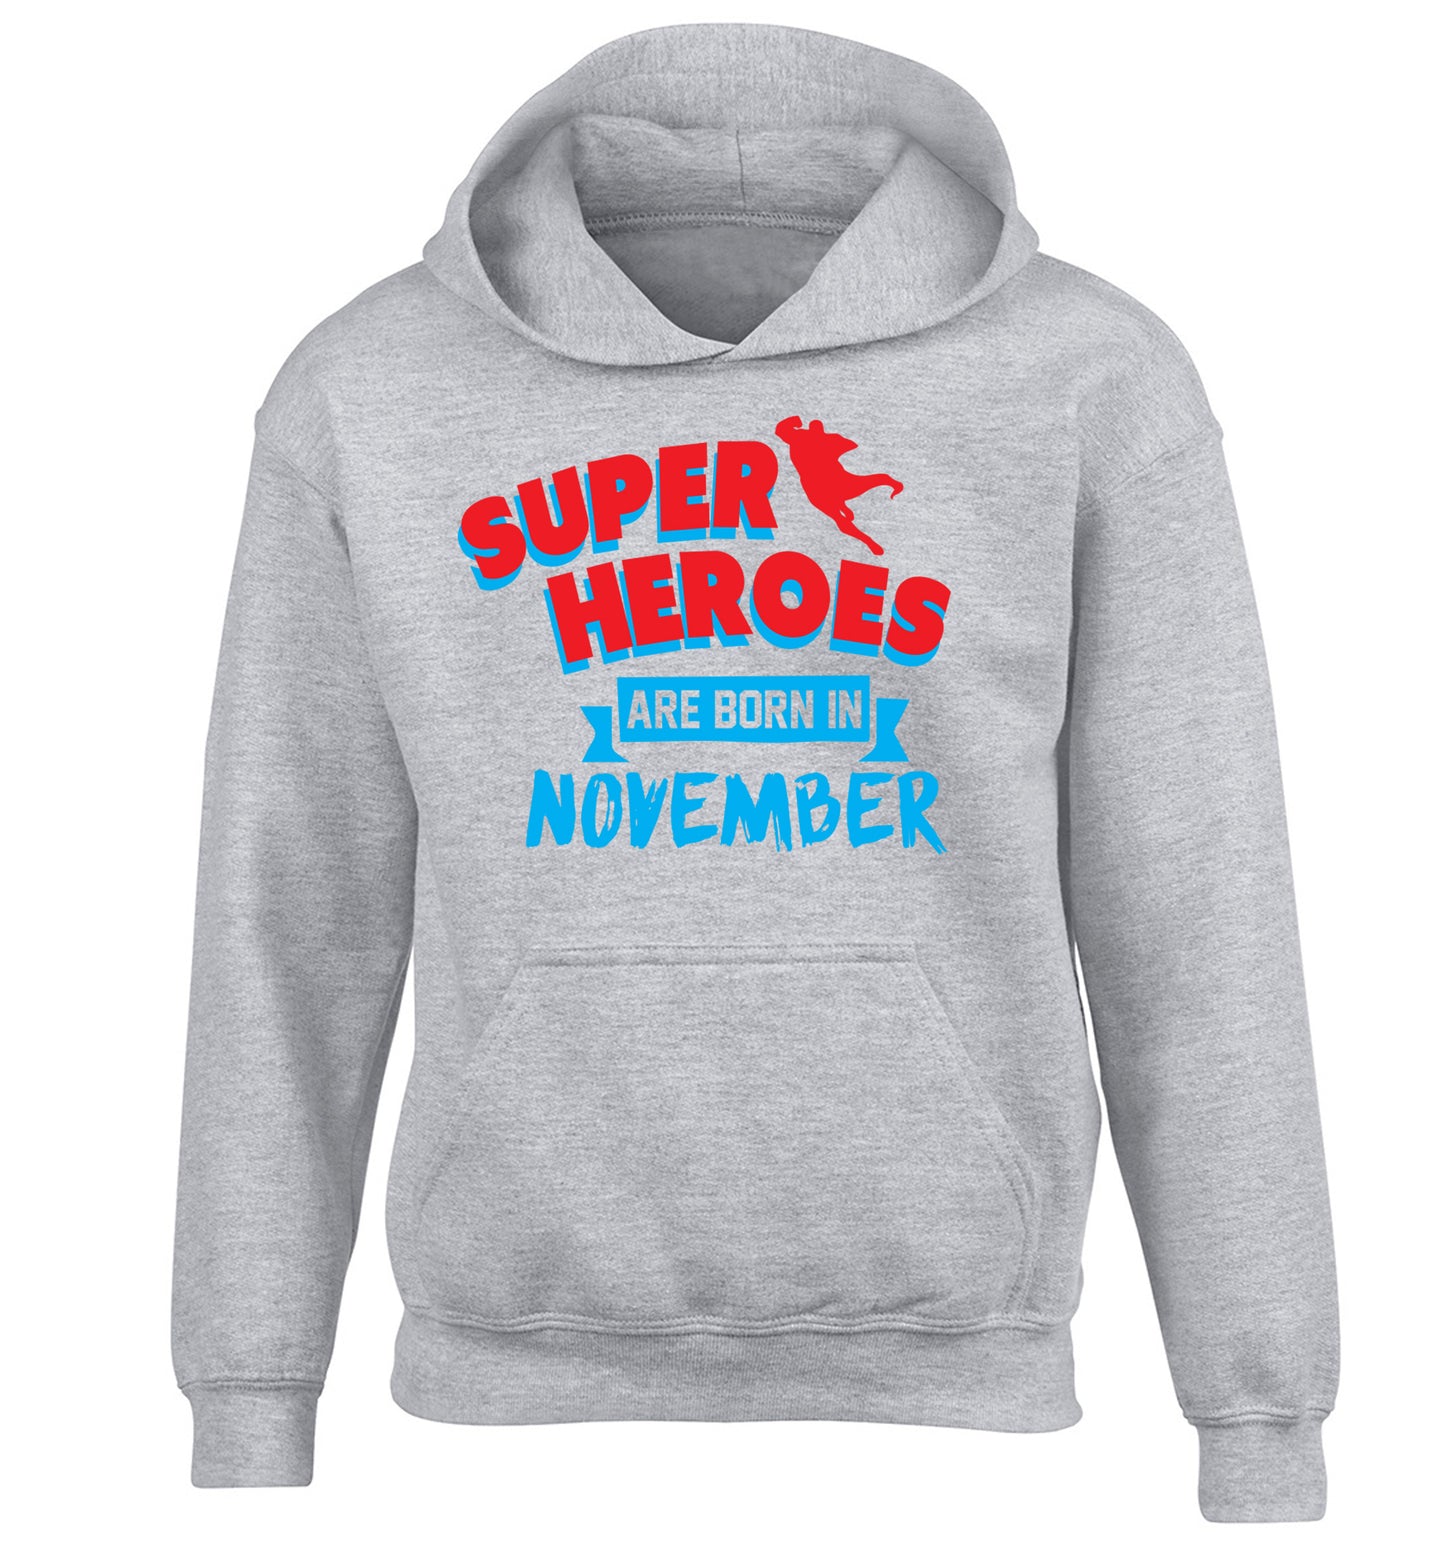 Superheroes are born in November children's grey hoodie 12-13 Years